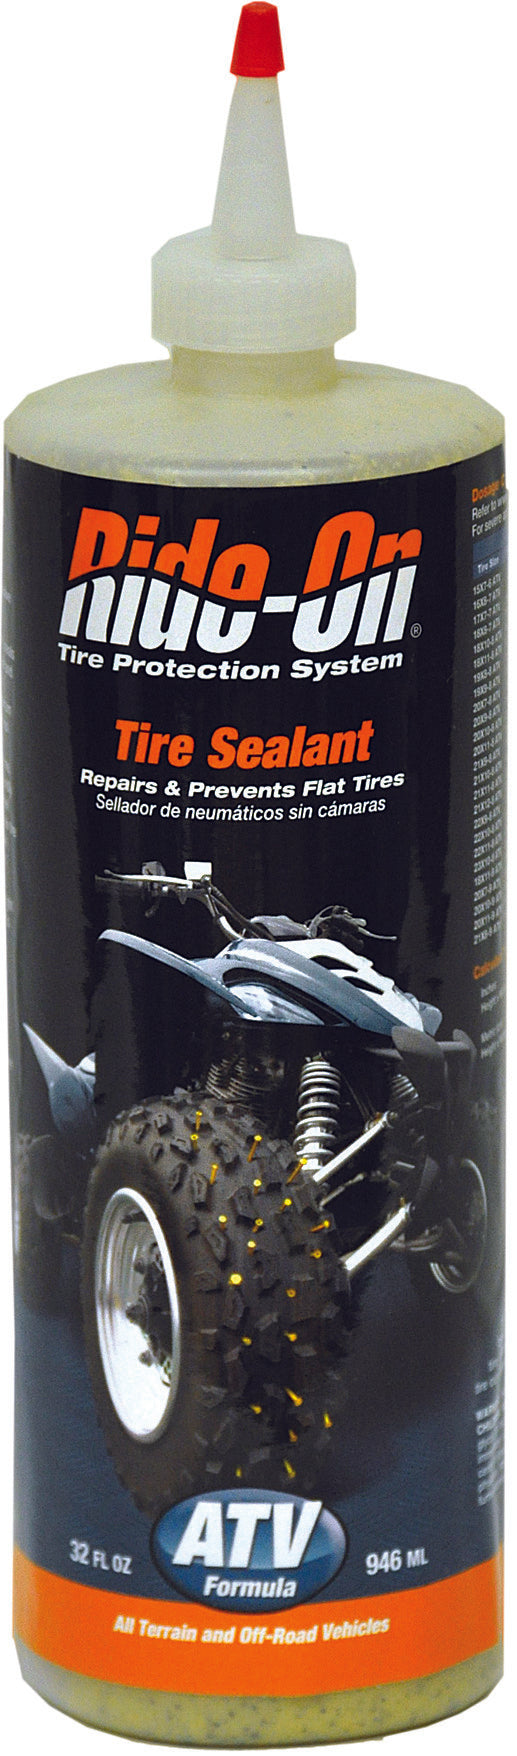 RIDE-ON Tps Tire Sealant 32oz 71232